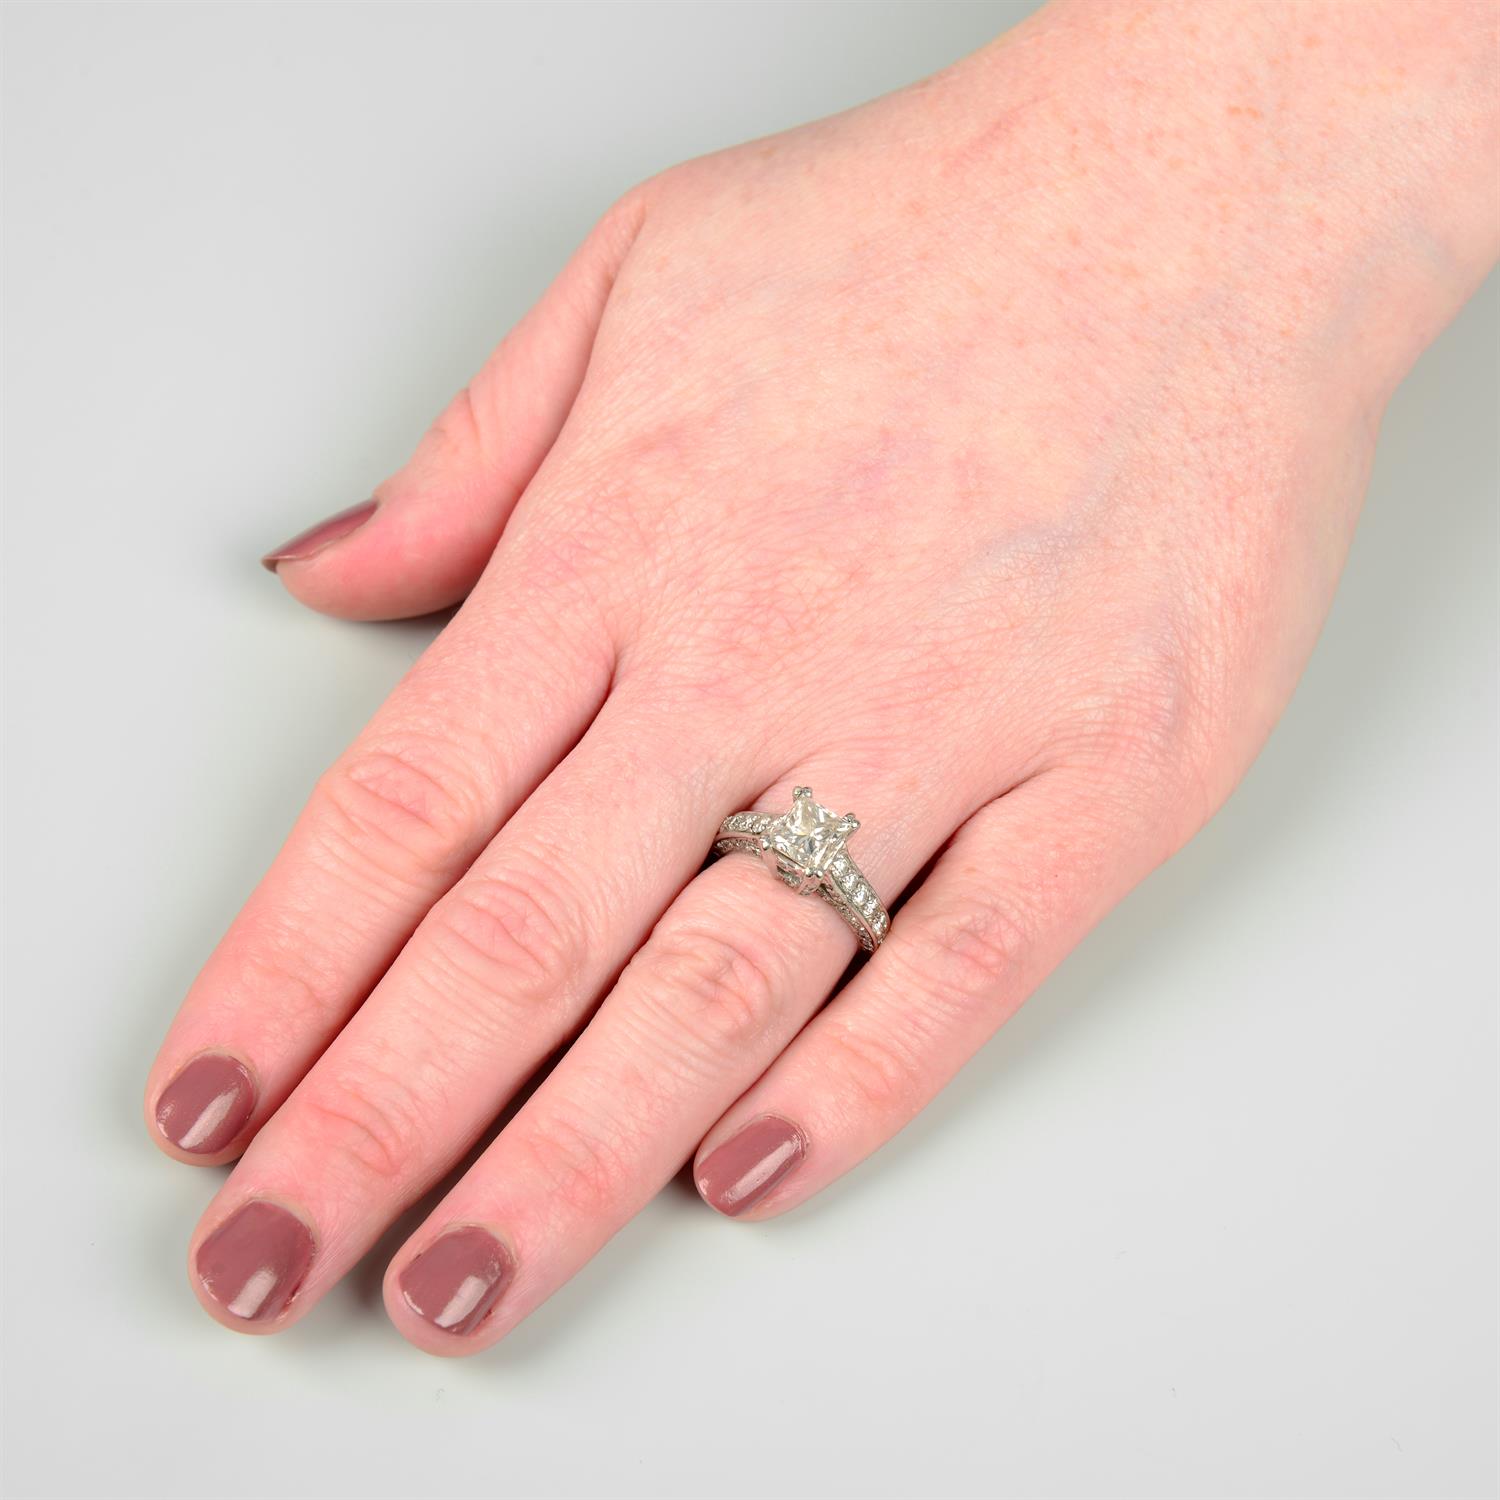 Rectangular-shape diamond ring - Image 5 of 6